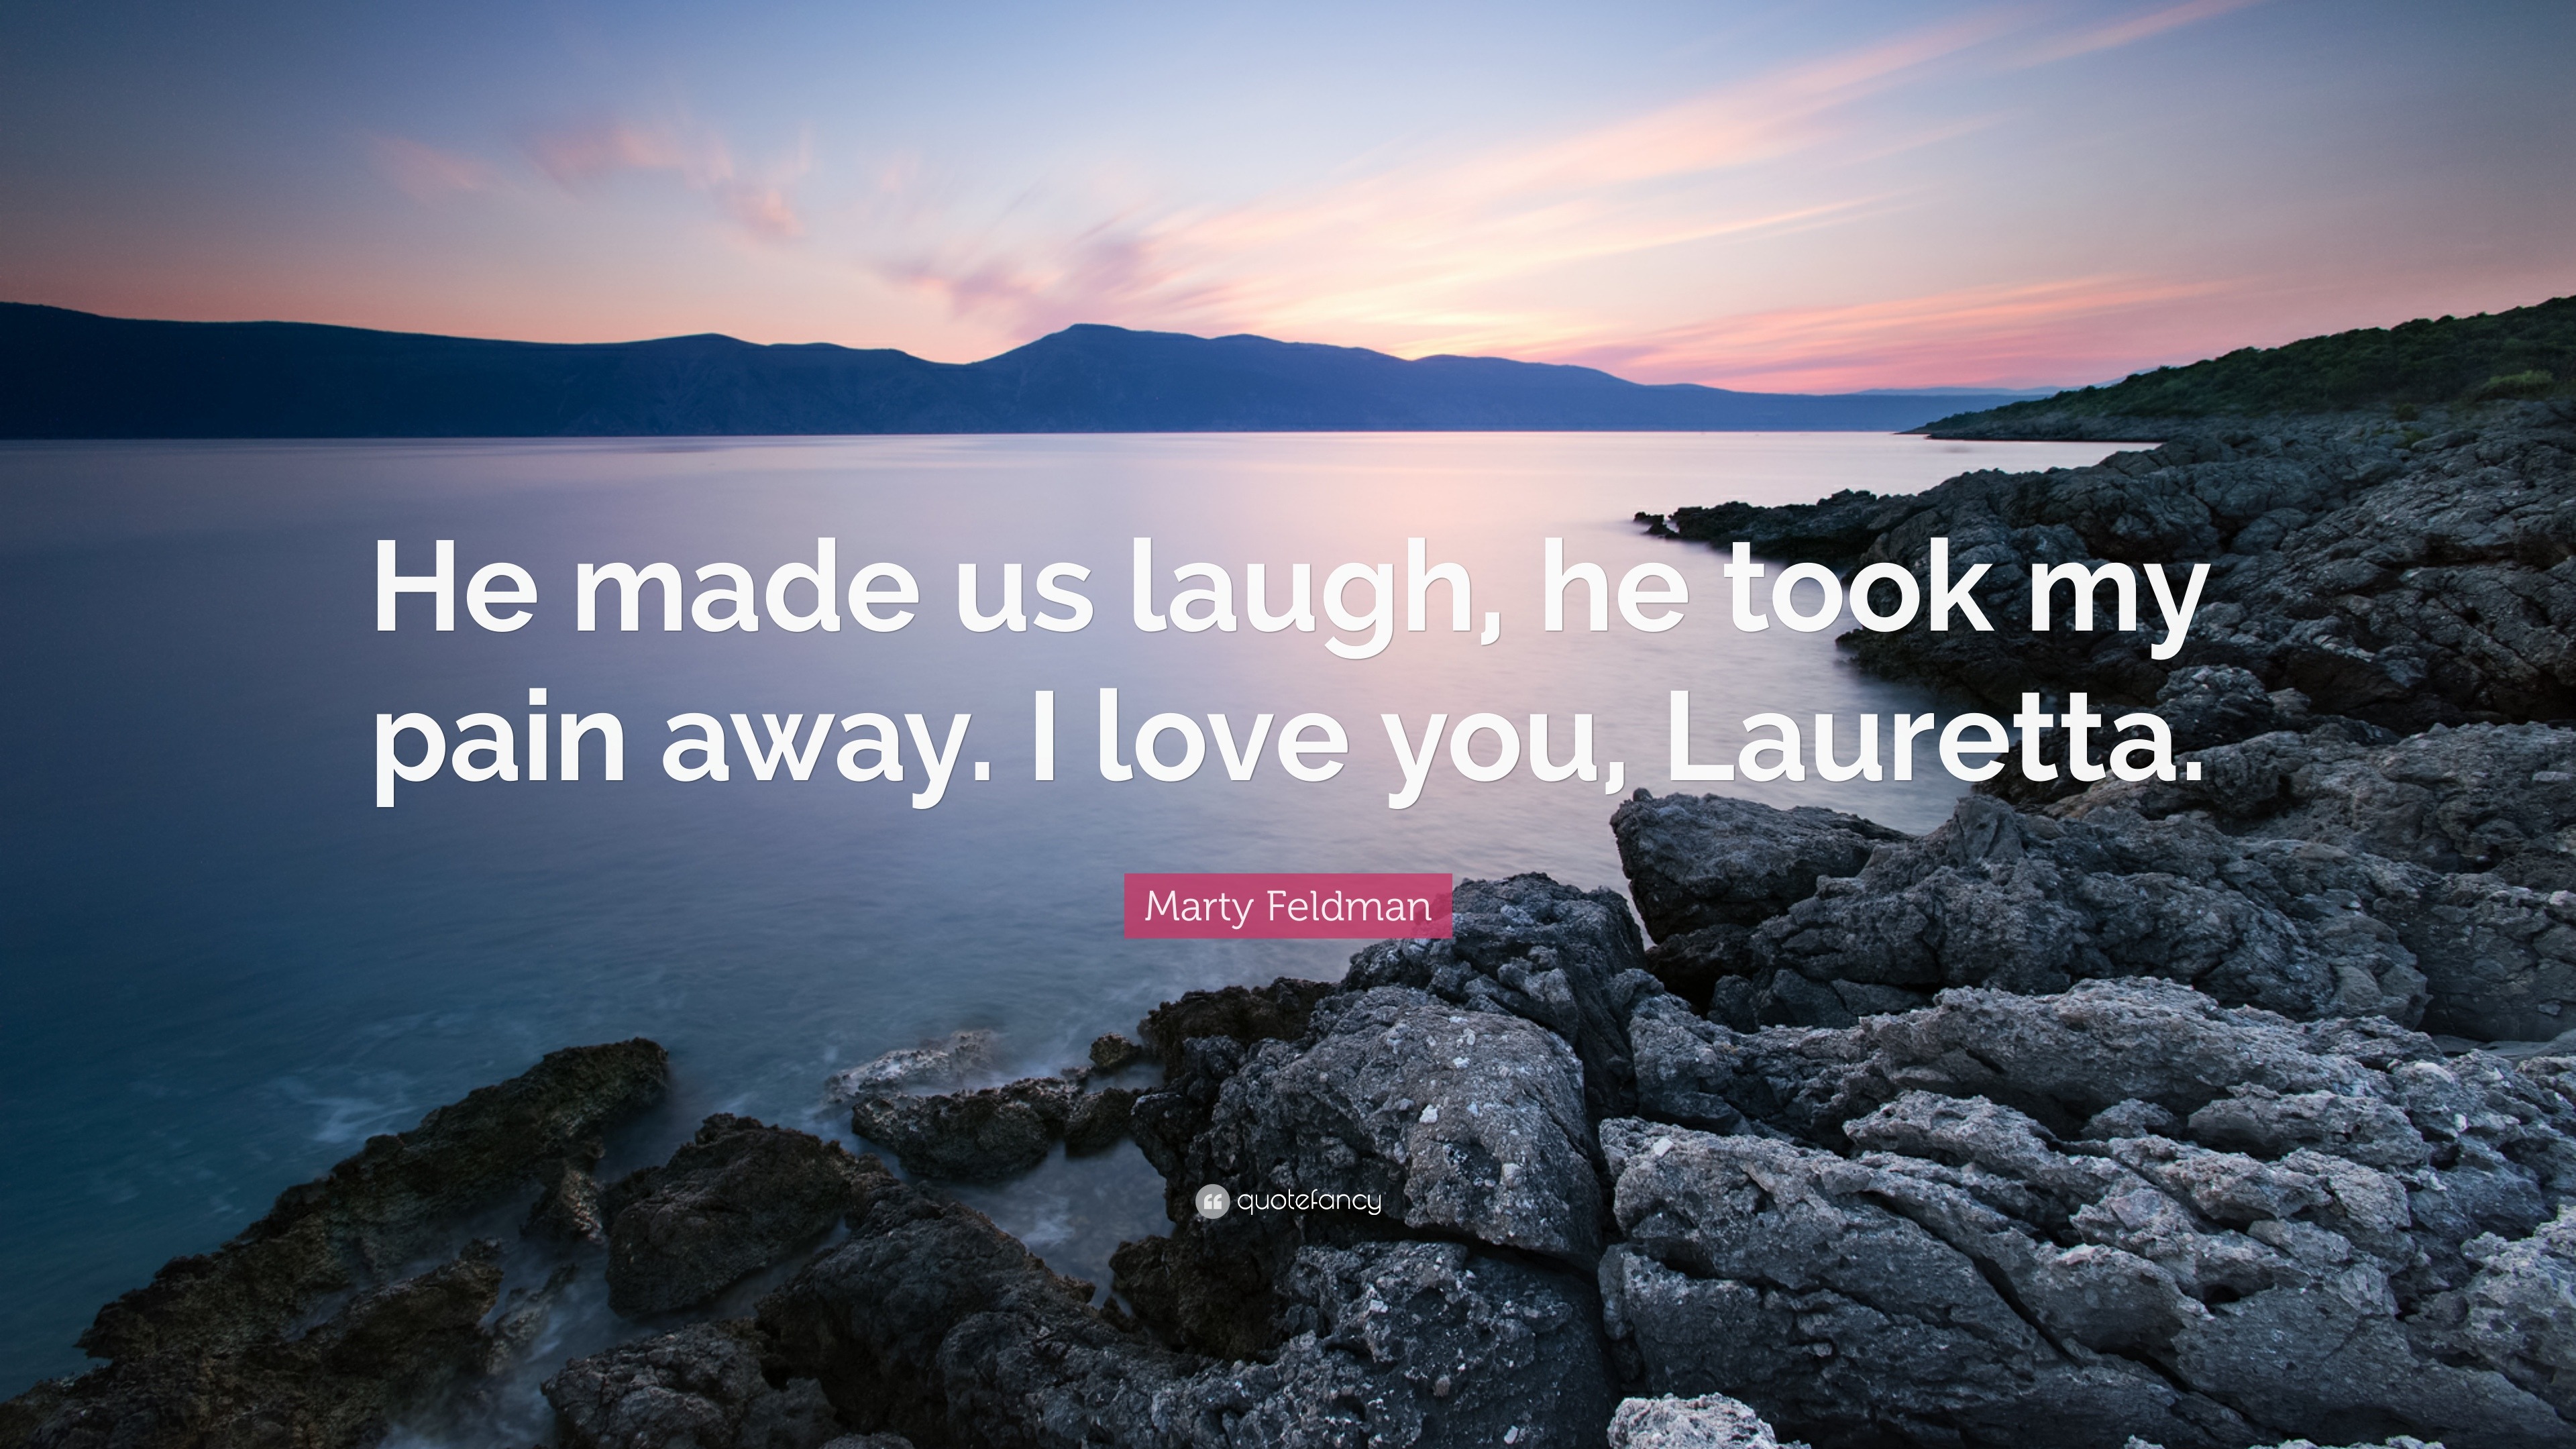 Marty Feldman Quote: “He made us laugh, he took my pain away. I love you,  Lauretta.”